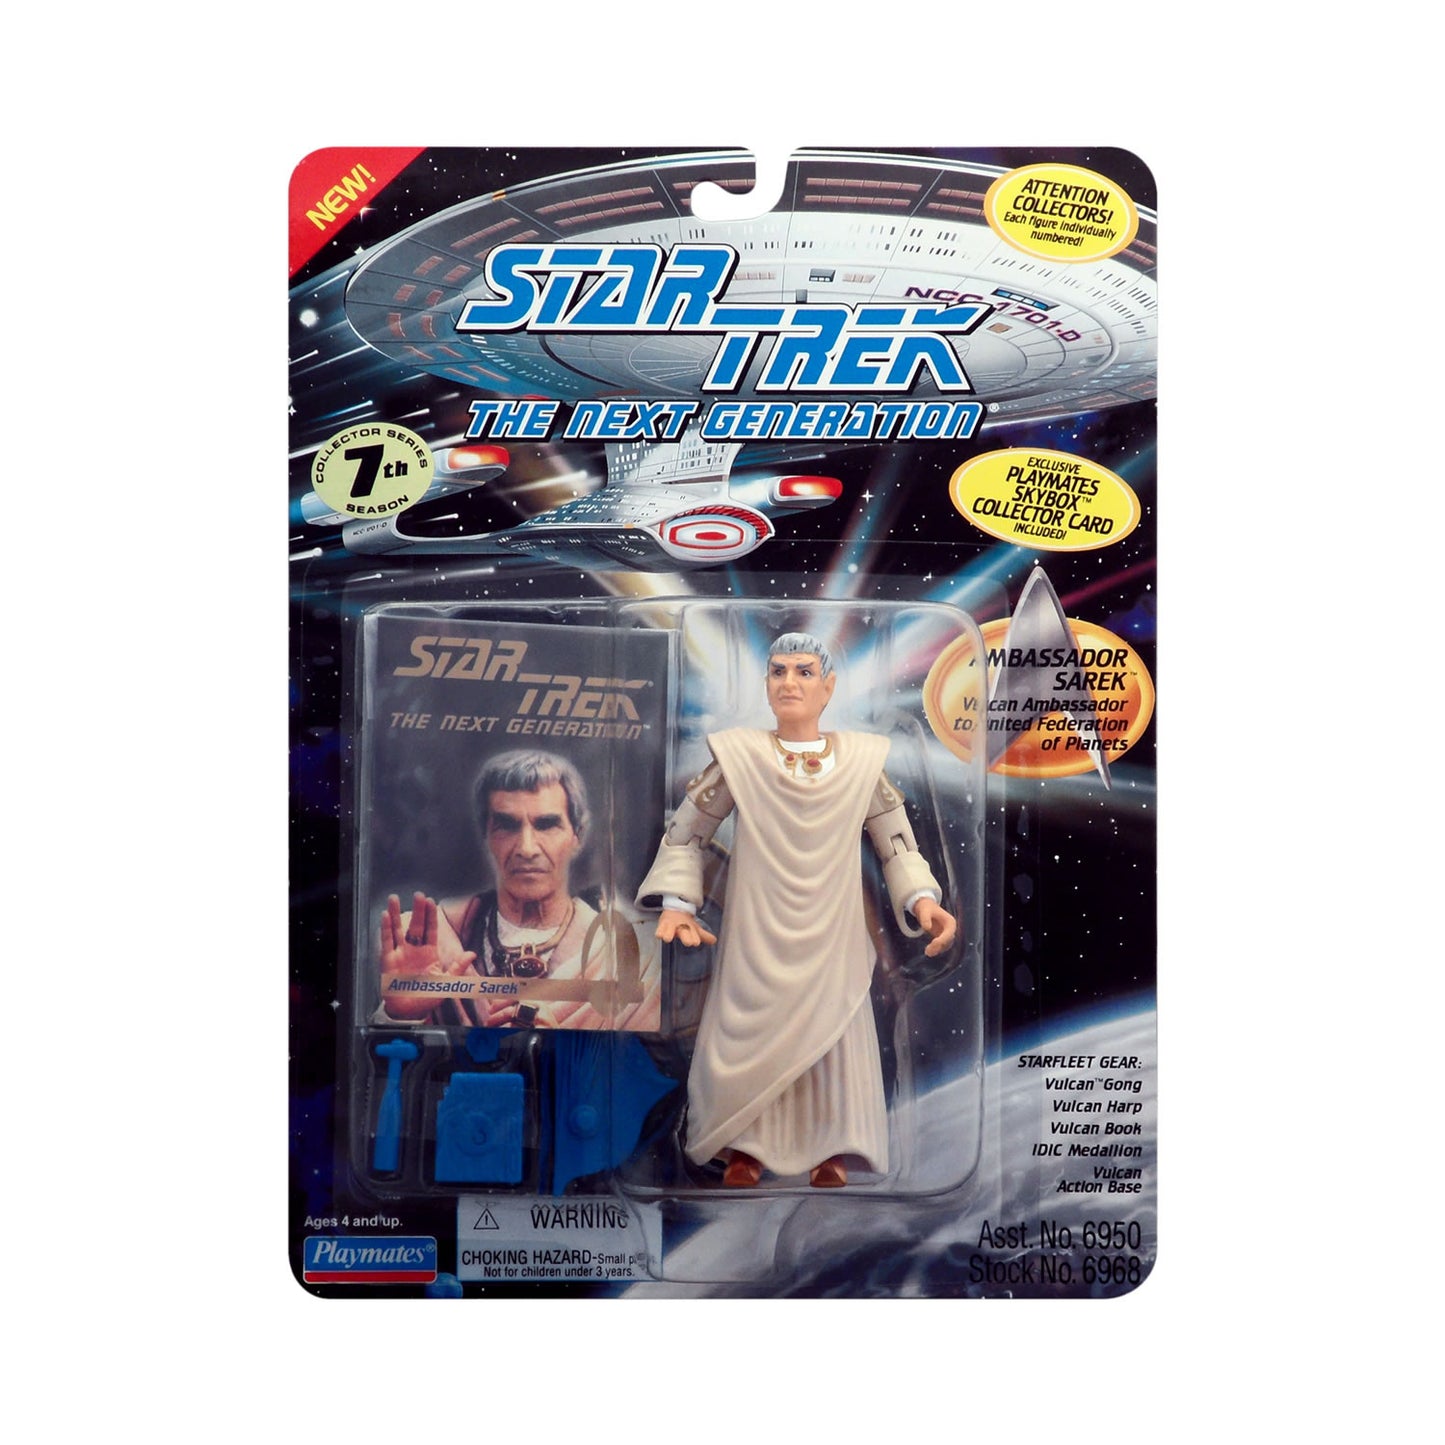 Ambassador Sarek From Star Trek The Next Generation Action Figures And Collectible Toys 6374